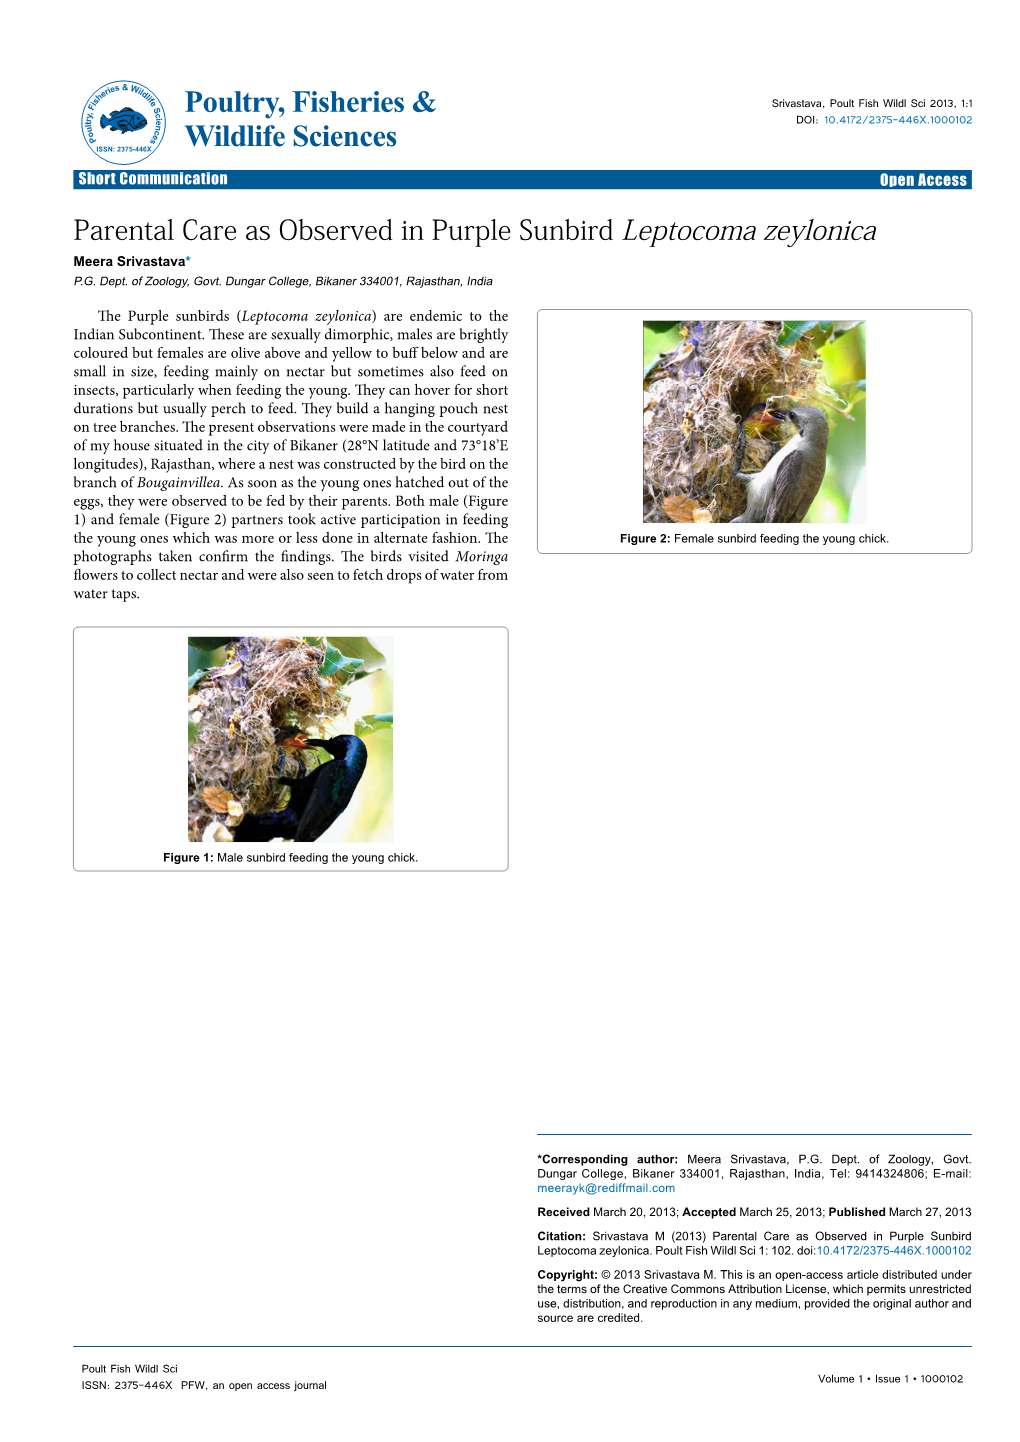 Parental Care As Observed in Purple Sunbird Leptocoma Zeylonica Meera Srivastava* P.G